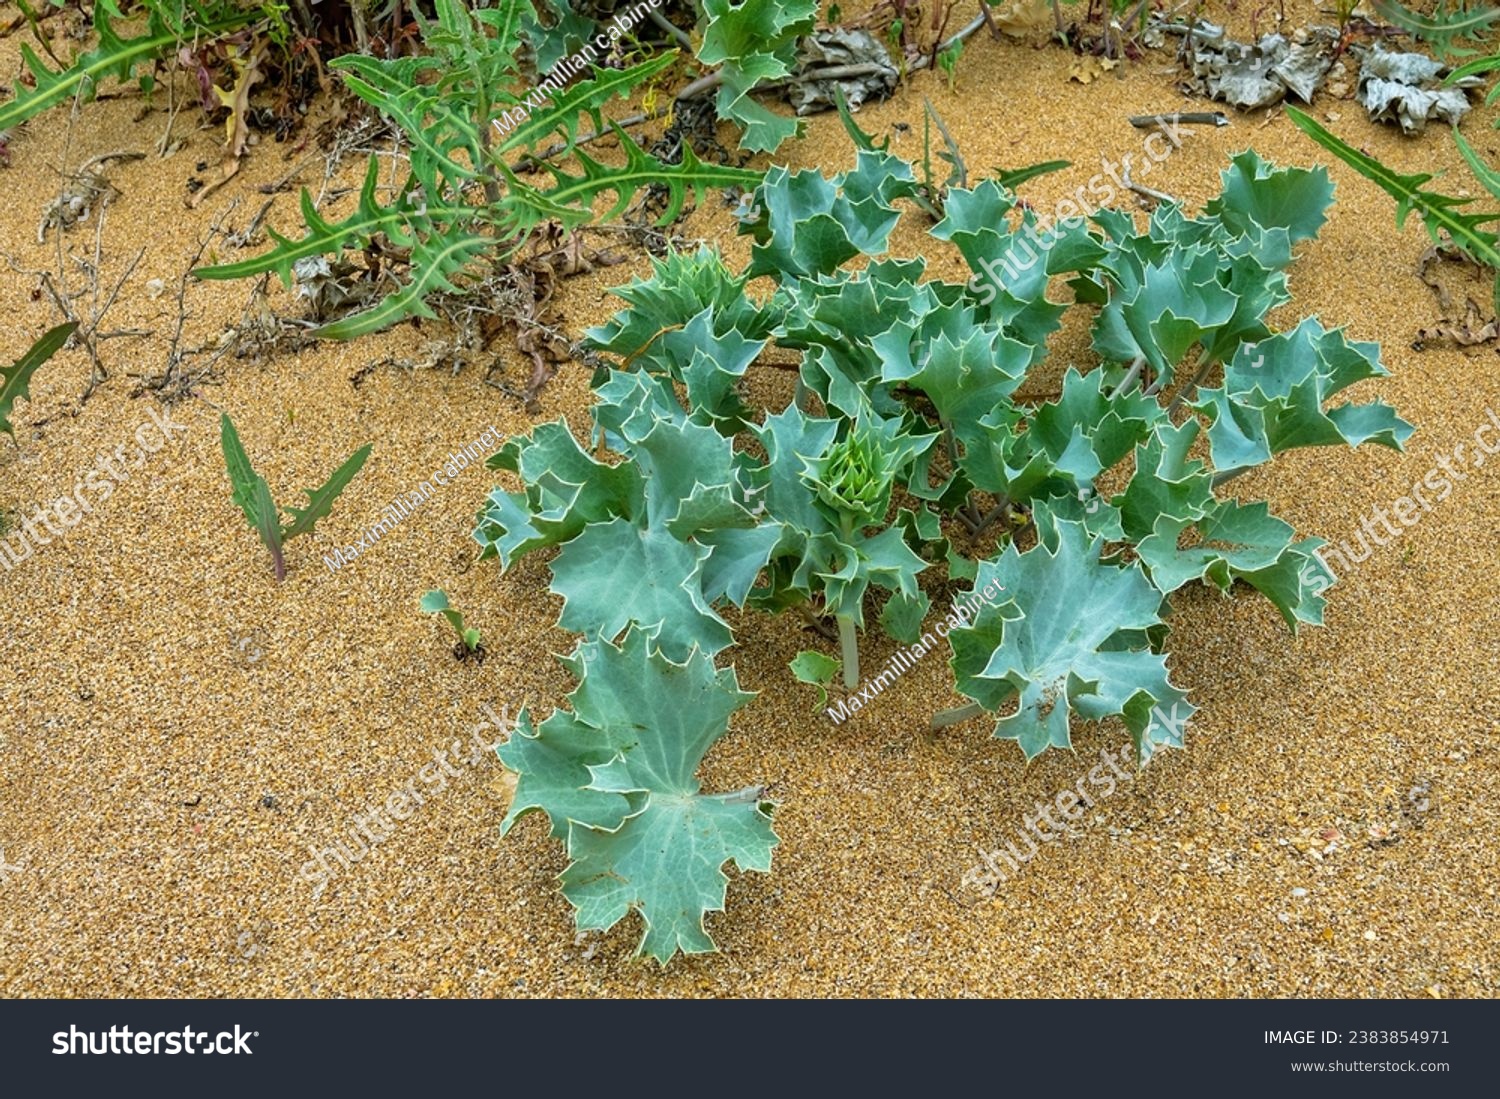 Sea holly (Eryngium maritimum) on sandy beach in northern part of Black Sea, coastal vegetated dune, vegetative plant (renascent), Expanded root blocks sand, development of colonization by vegetation #2383854971